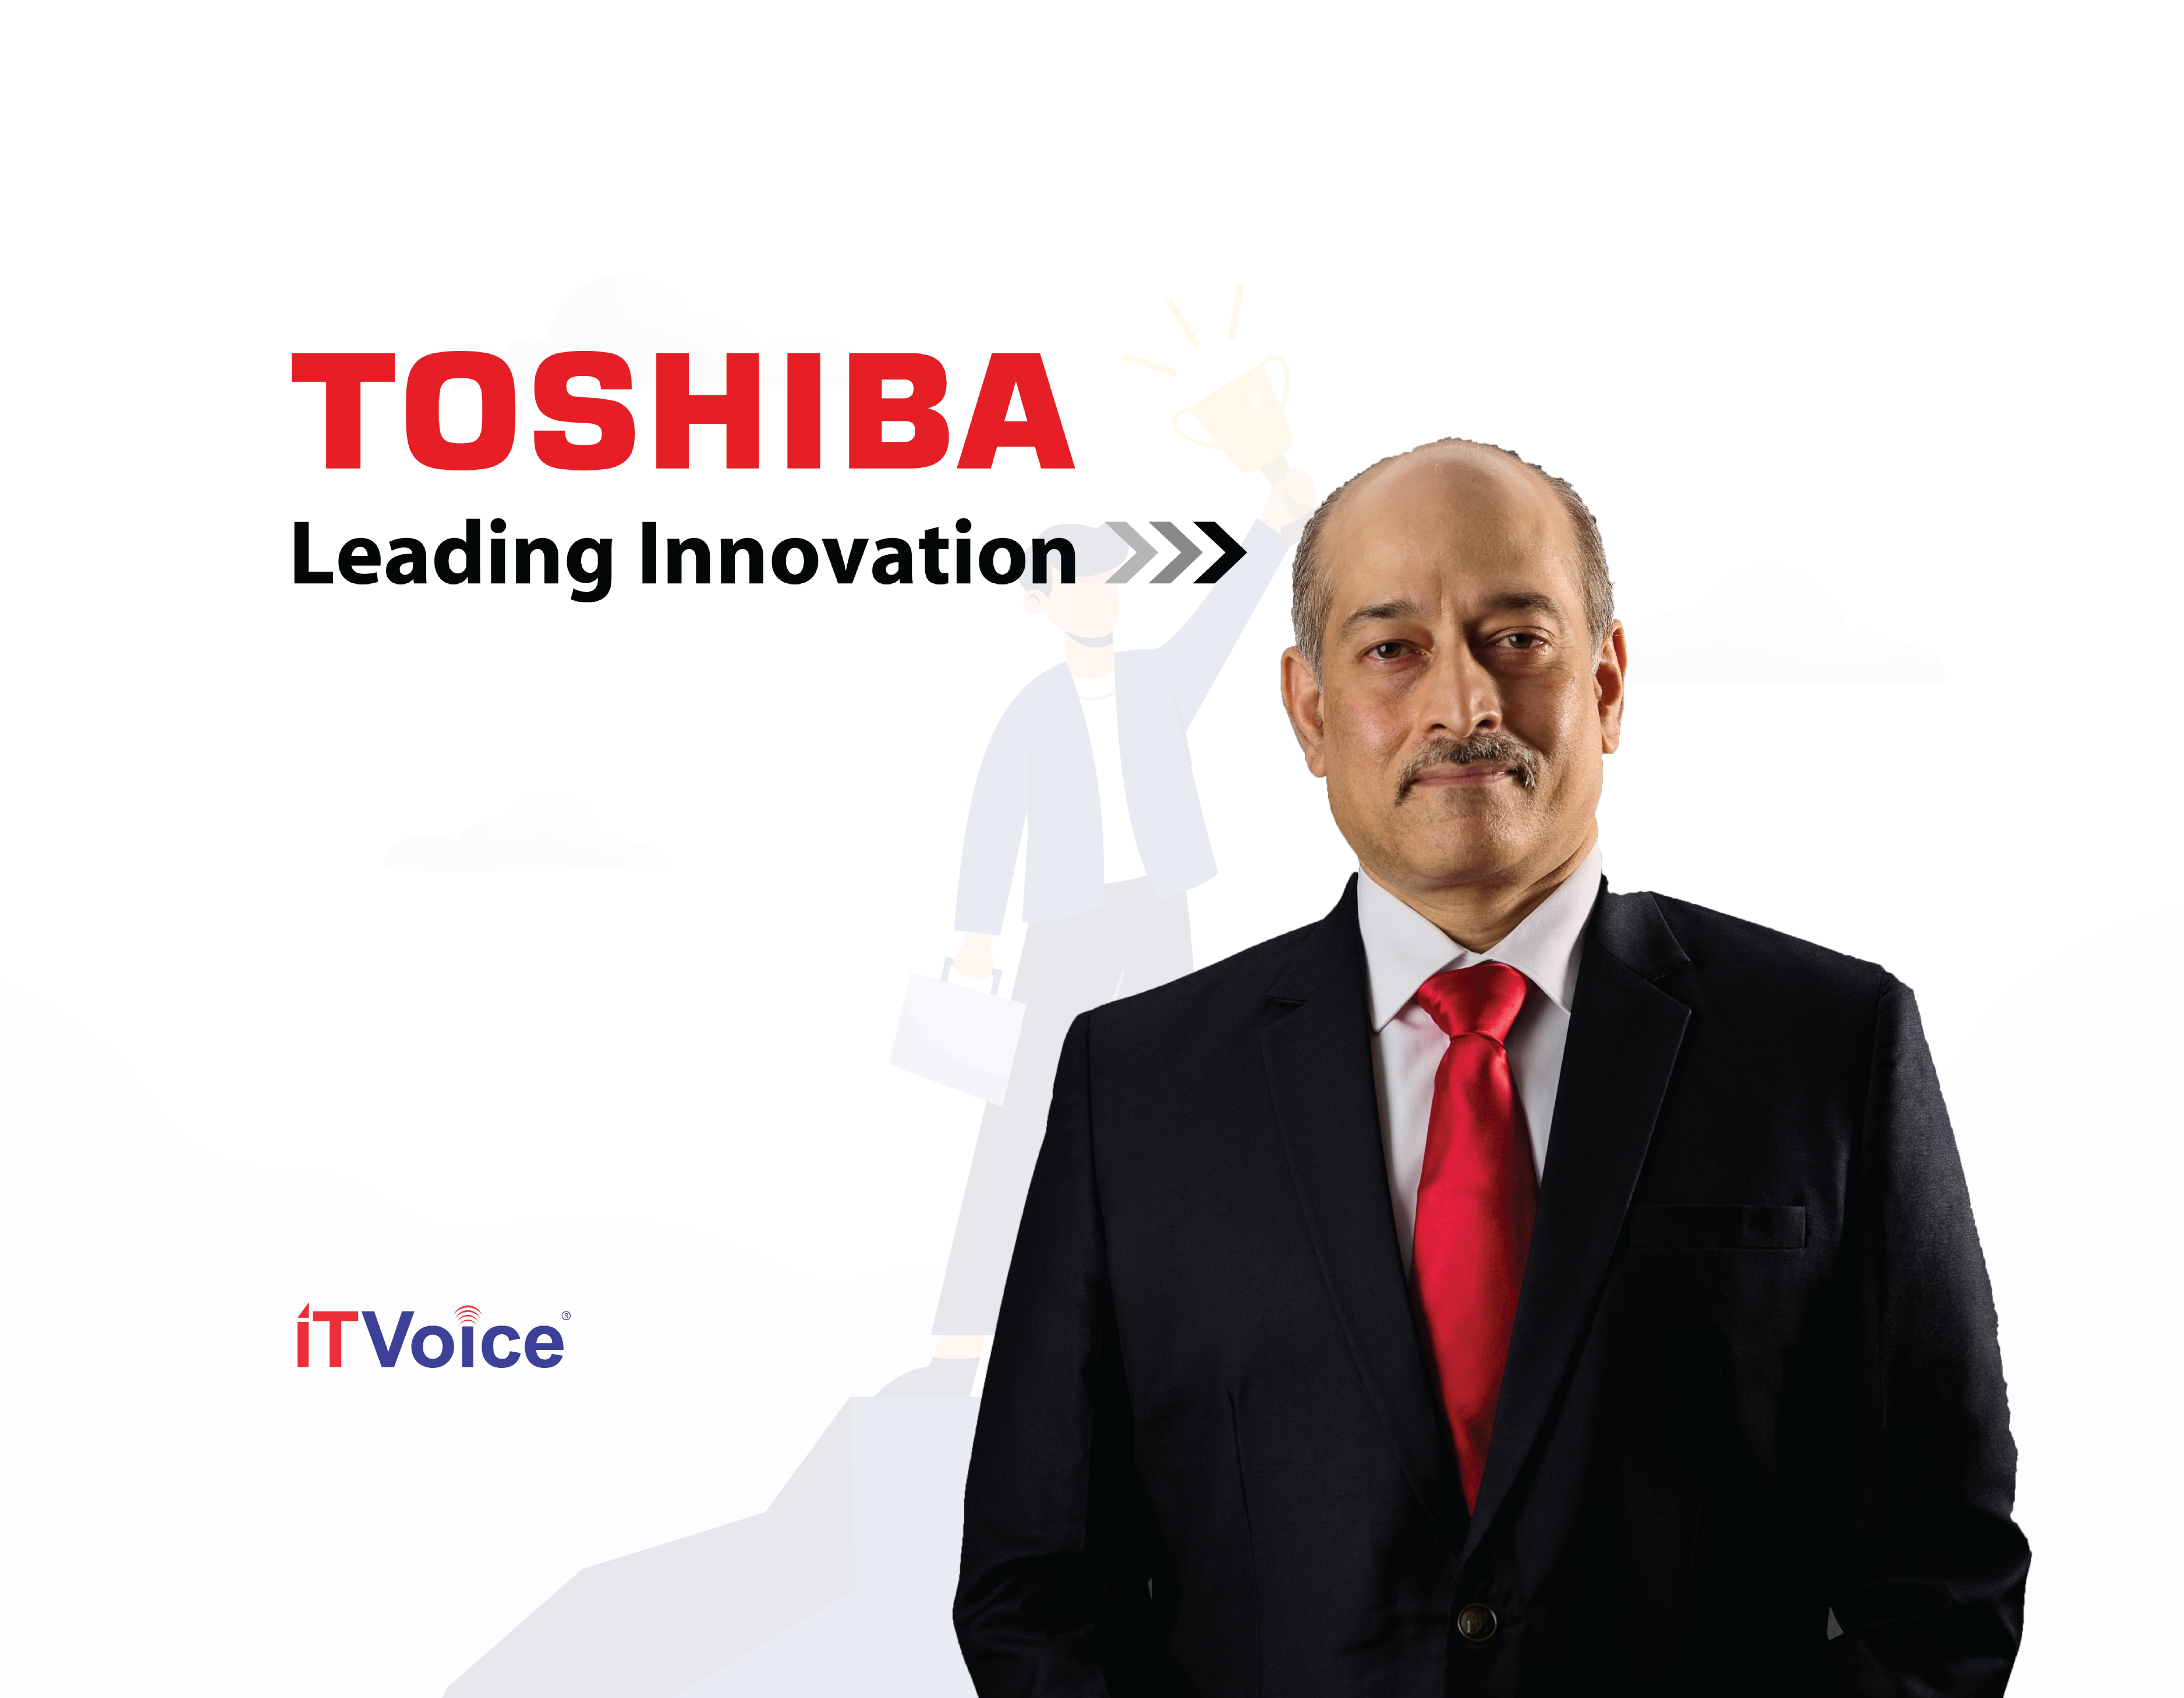 Mr. Ramdas Baliga, Managing Director, Toshiba Software India Private Limited